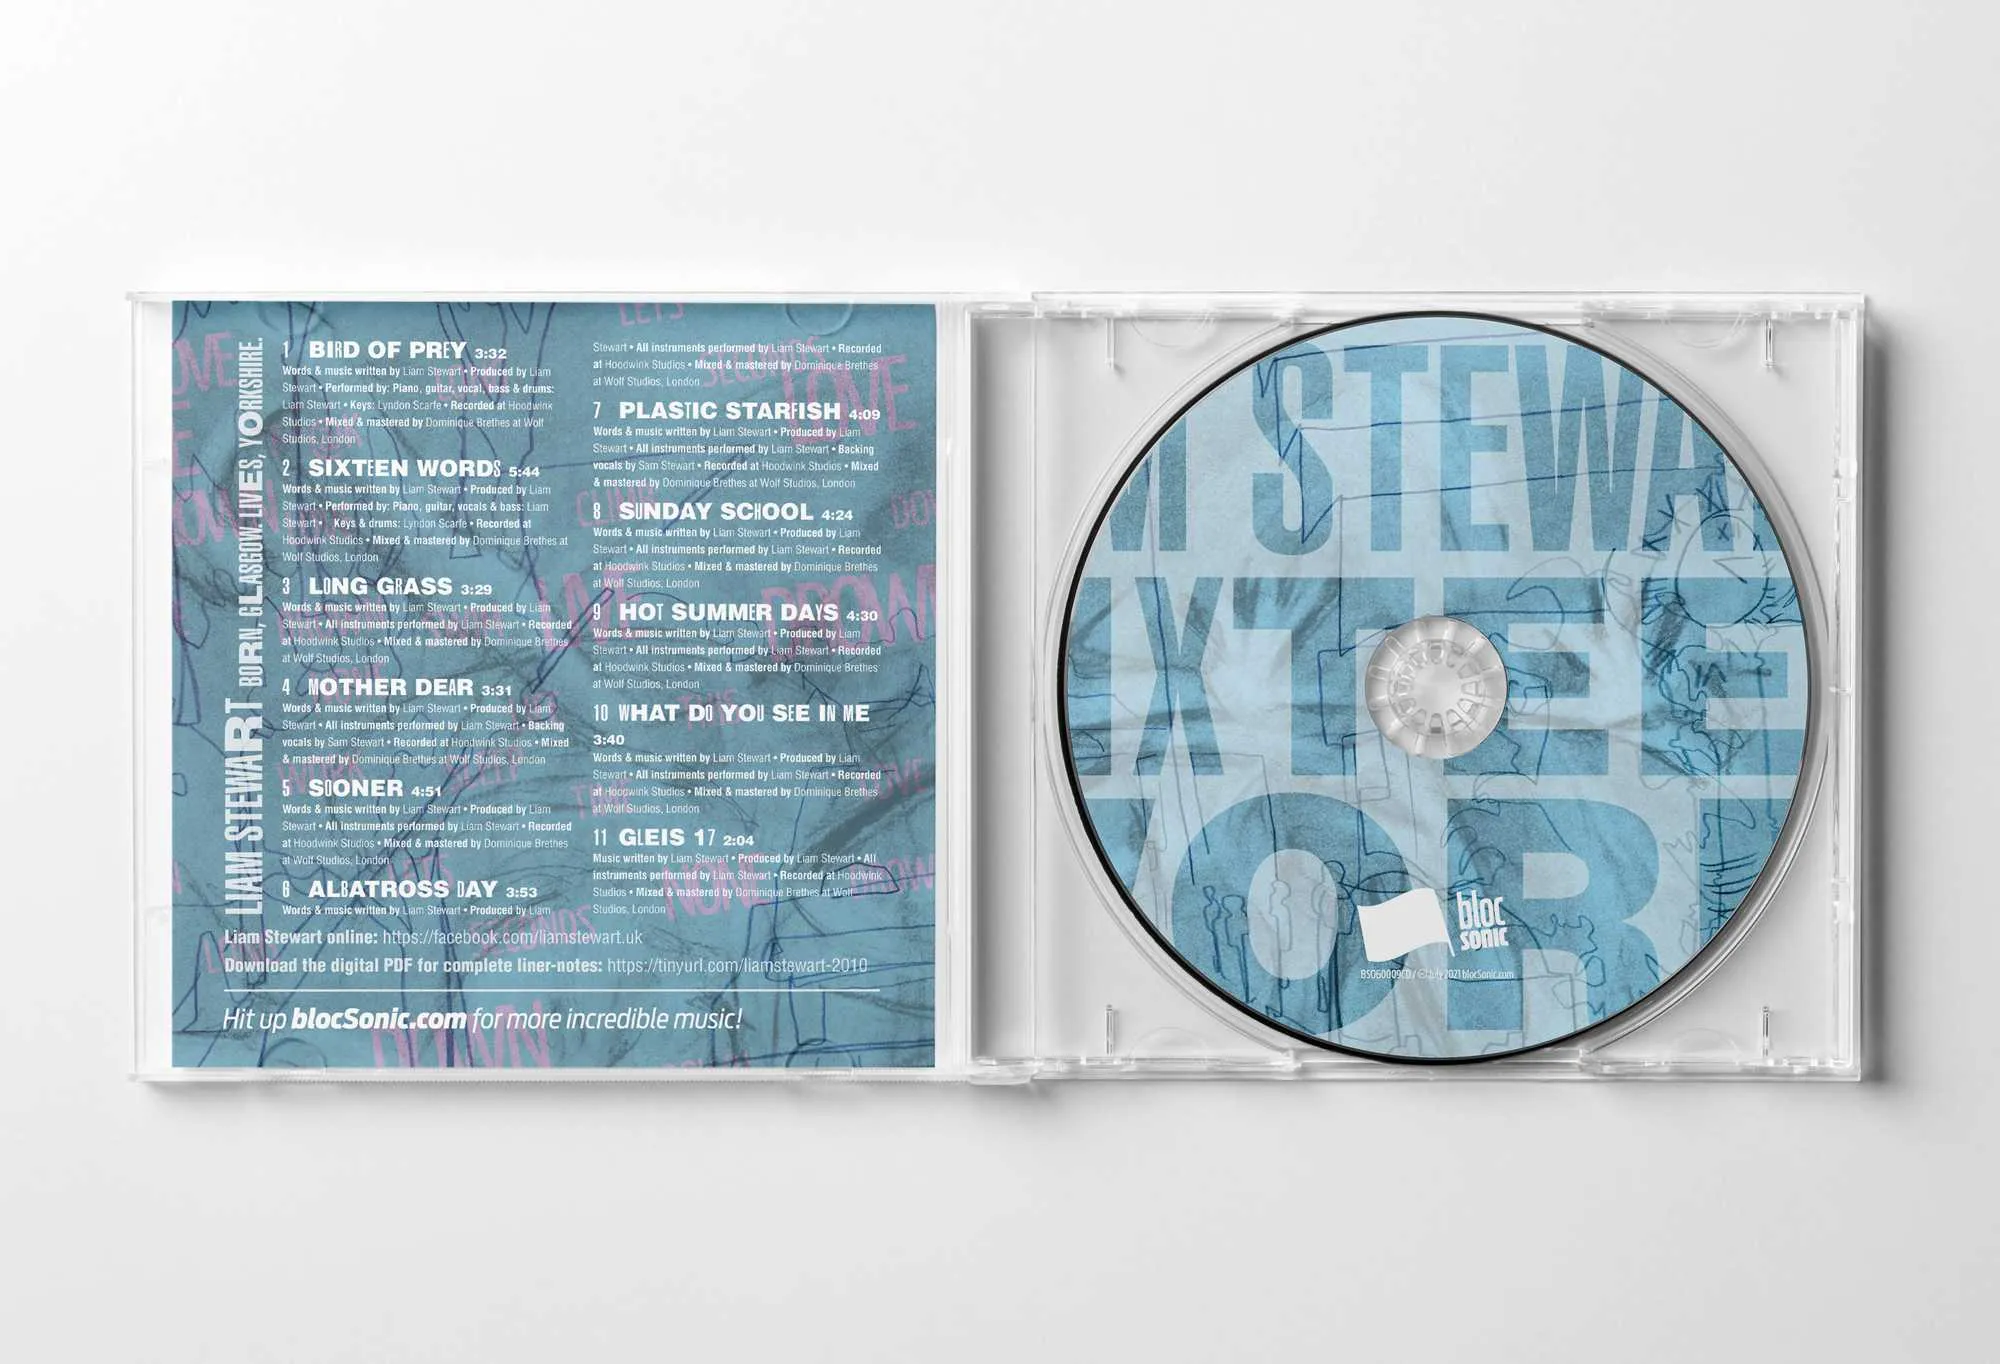 Album promo for “Sixteen Words” by Liam Stewart